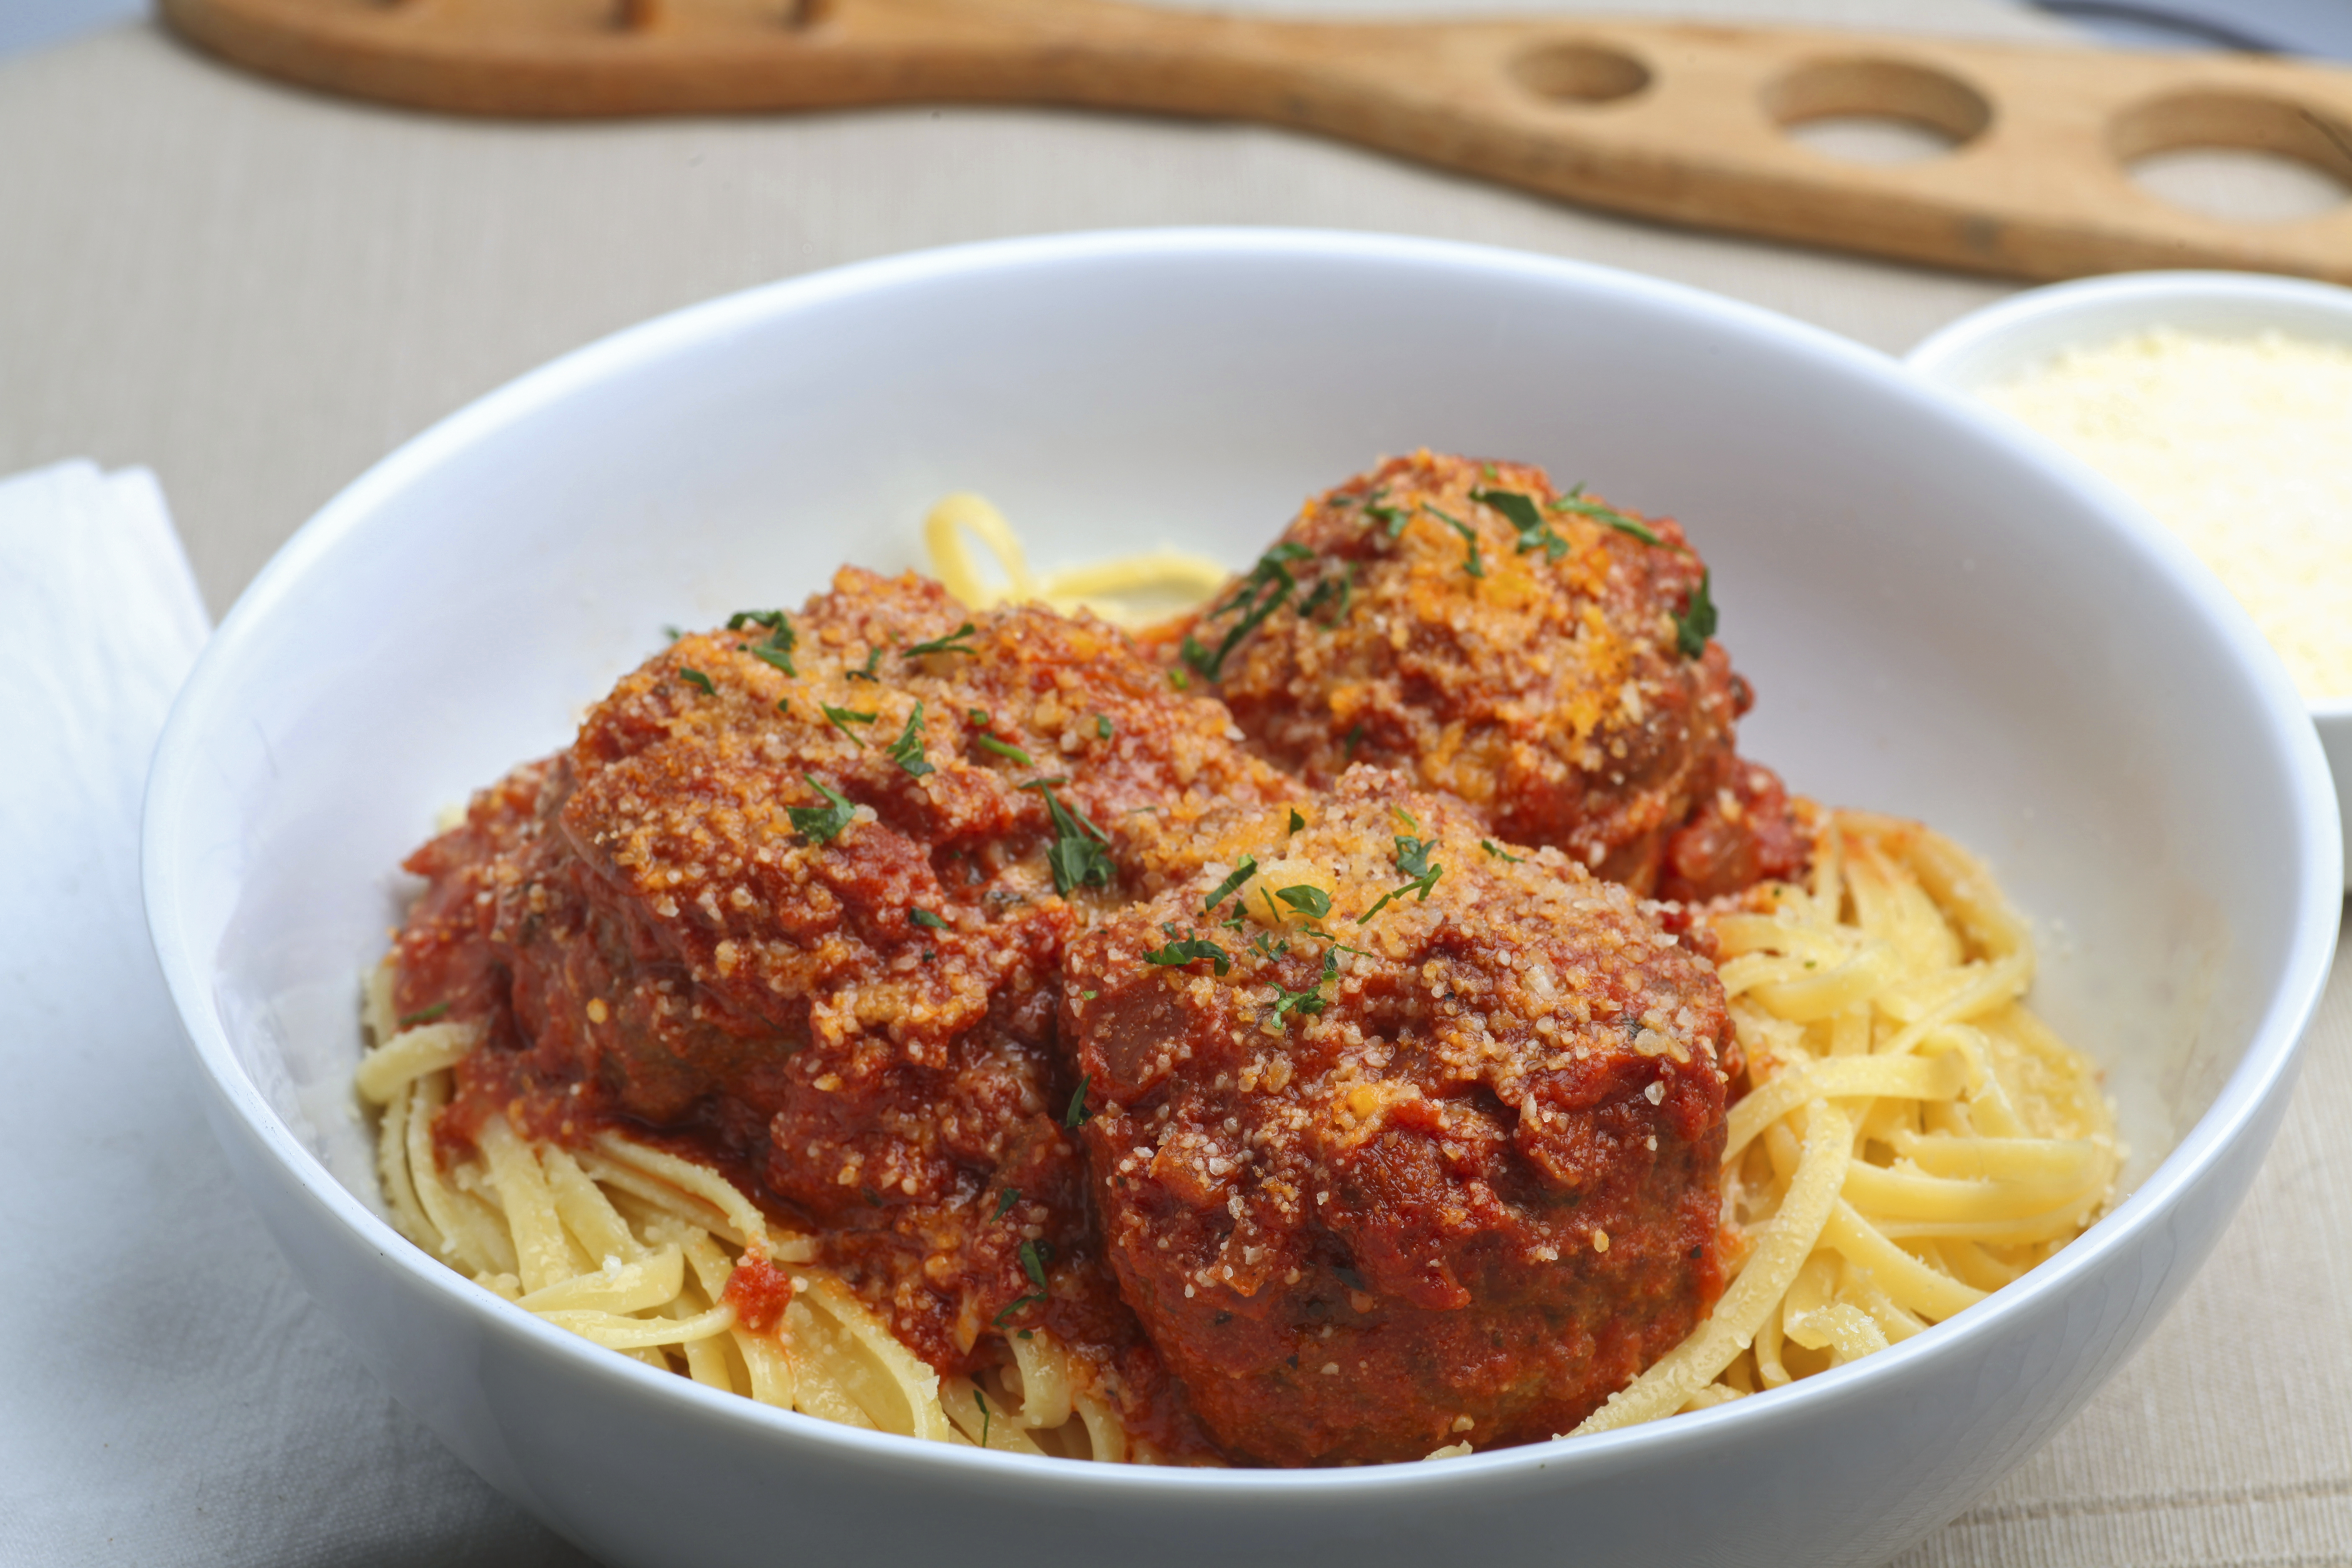 Linguini and meatballs